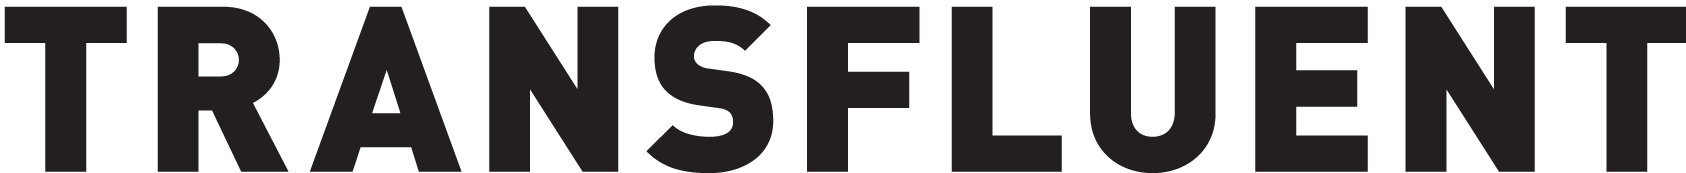 transfluent_name_logo